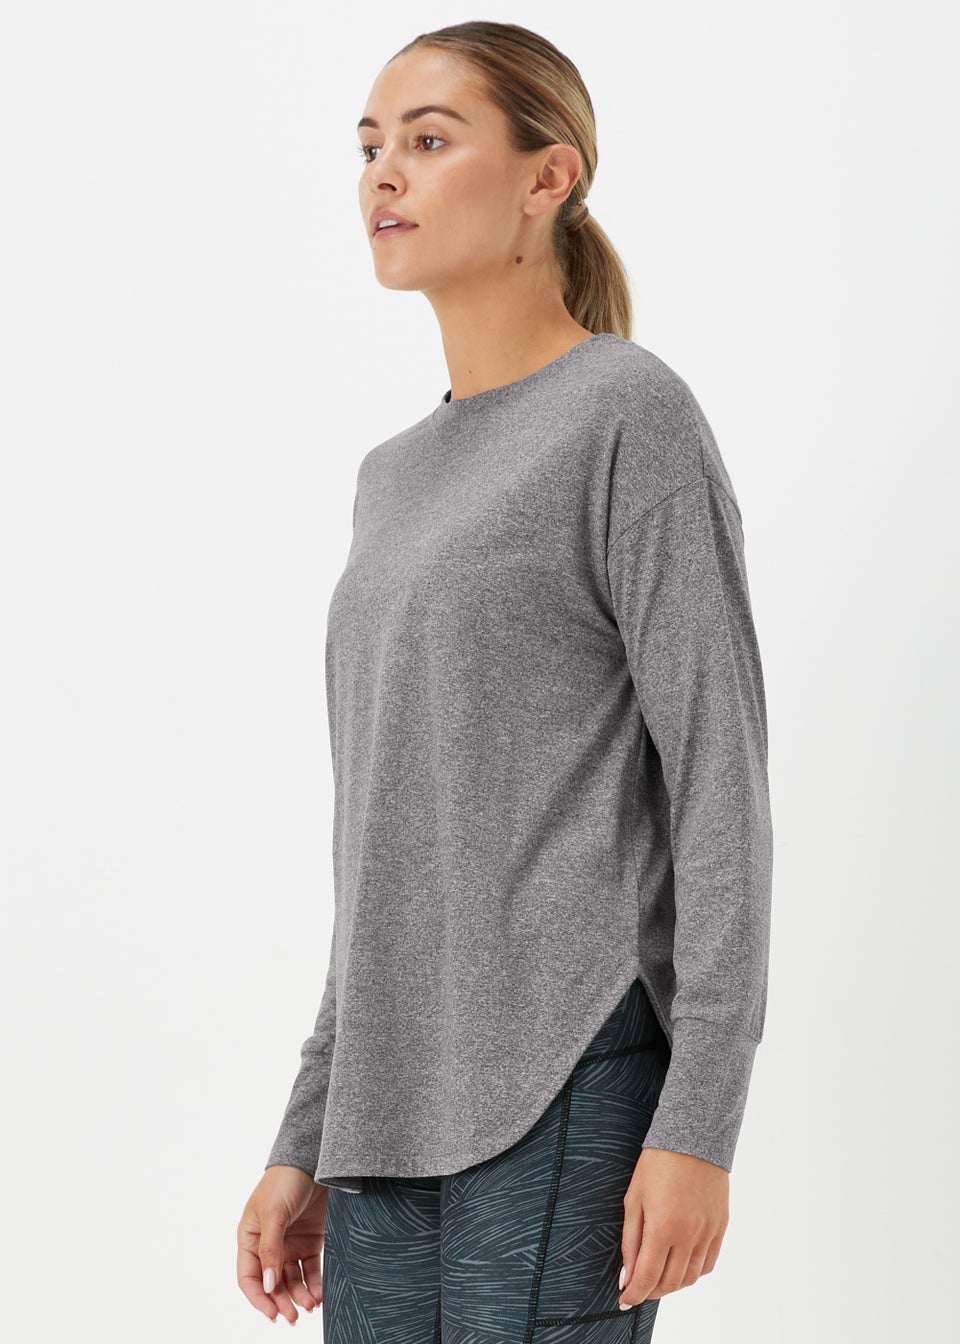 Souluxe Charcoal Long Sleeve Sports T-Shirt - Matalan